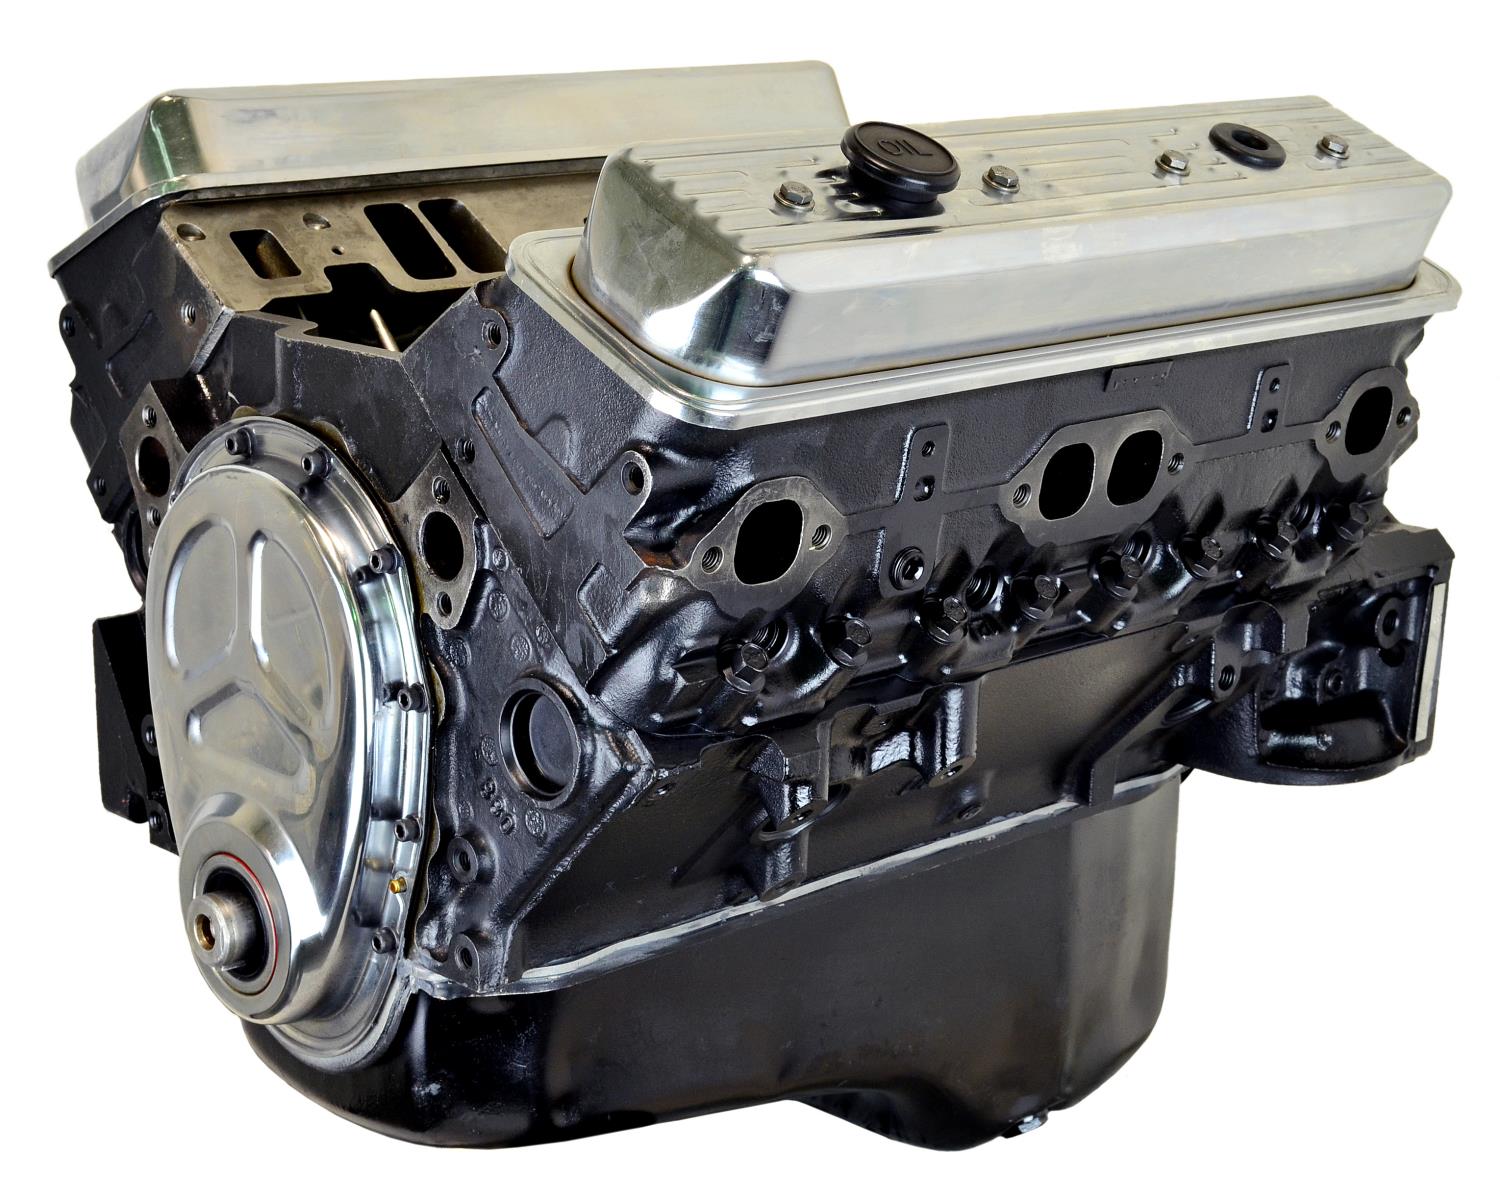 HP90 High Performance Marine Crate Engine Small Block Chevy 383ci / 345HP / 445TQ